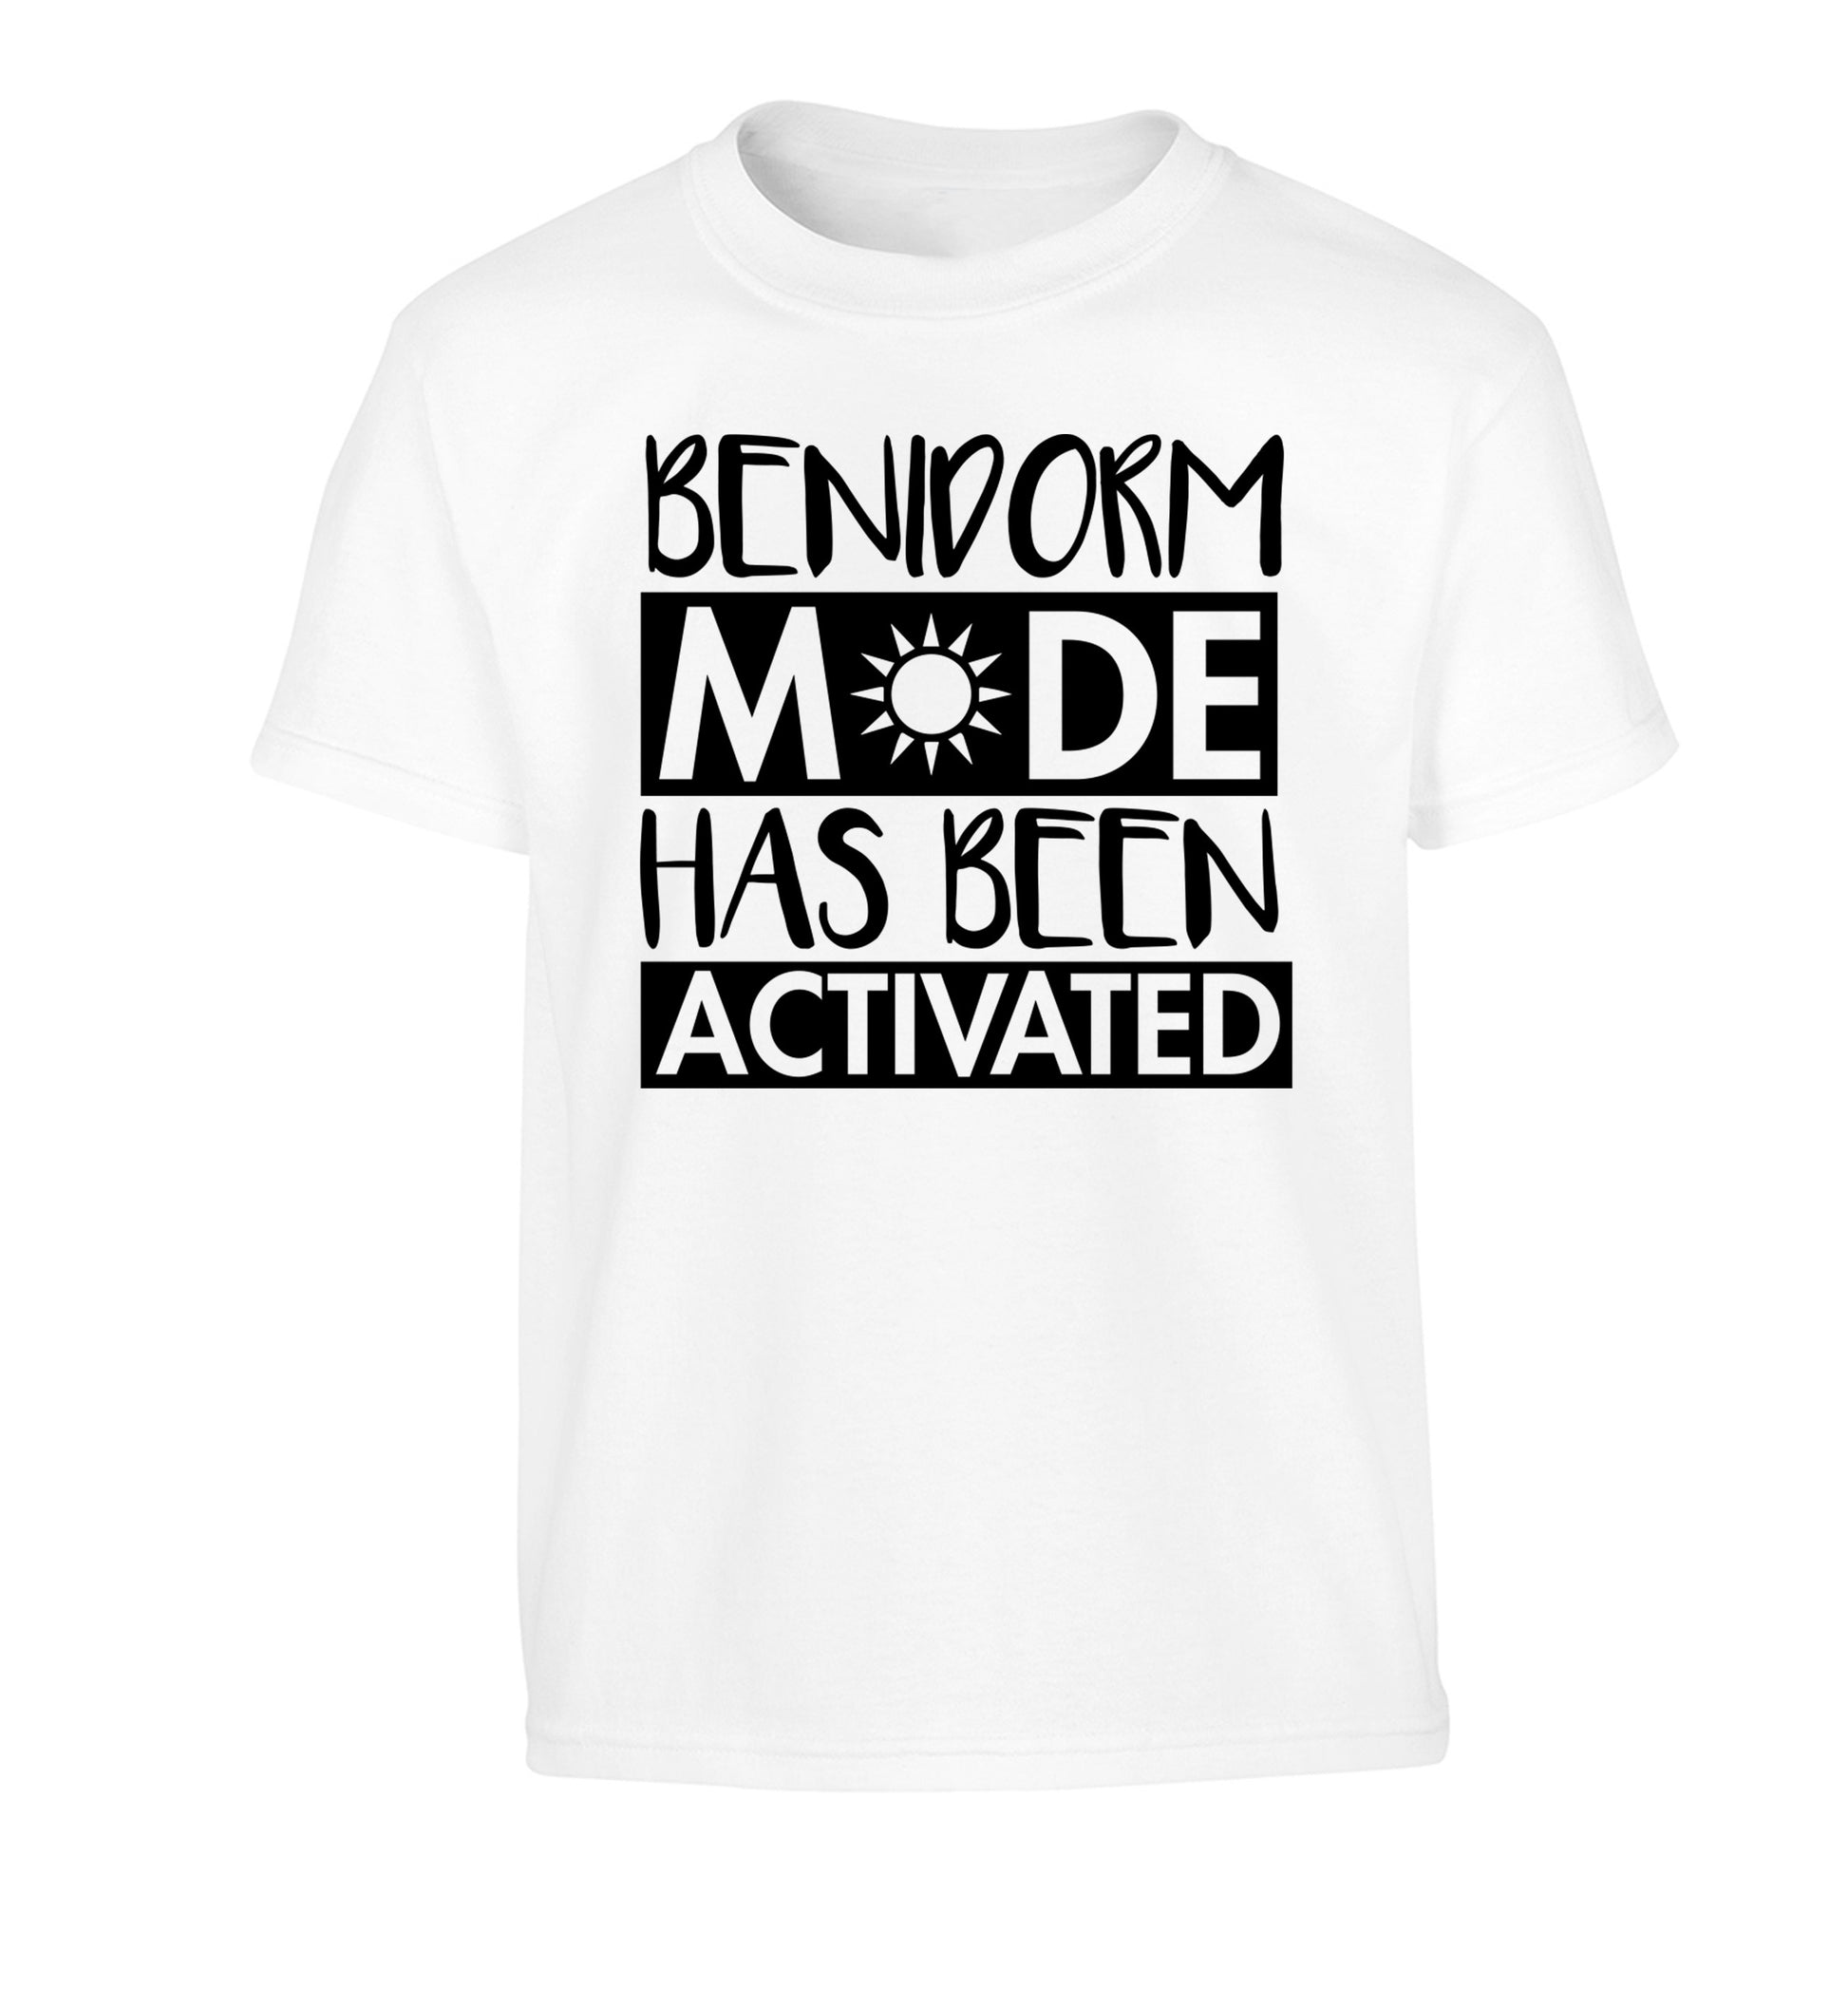 Benidorm mode has been activated Children's white Tshirt 12-14 Years